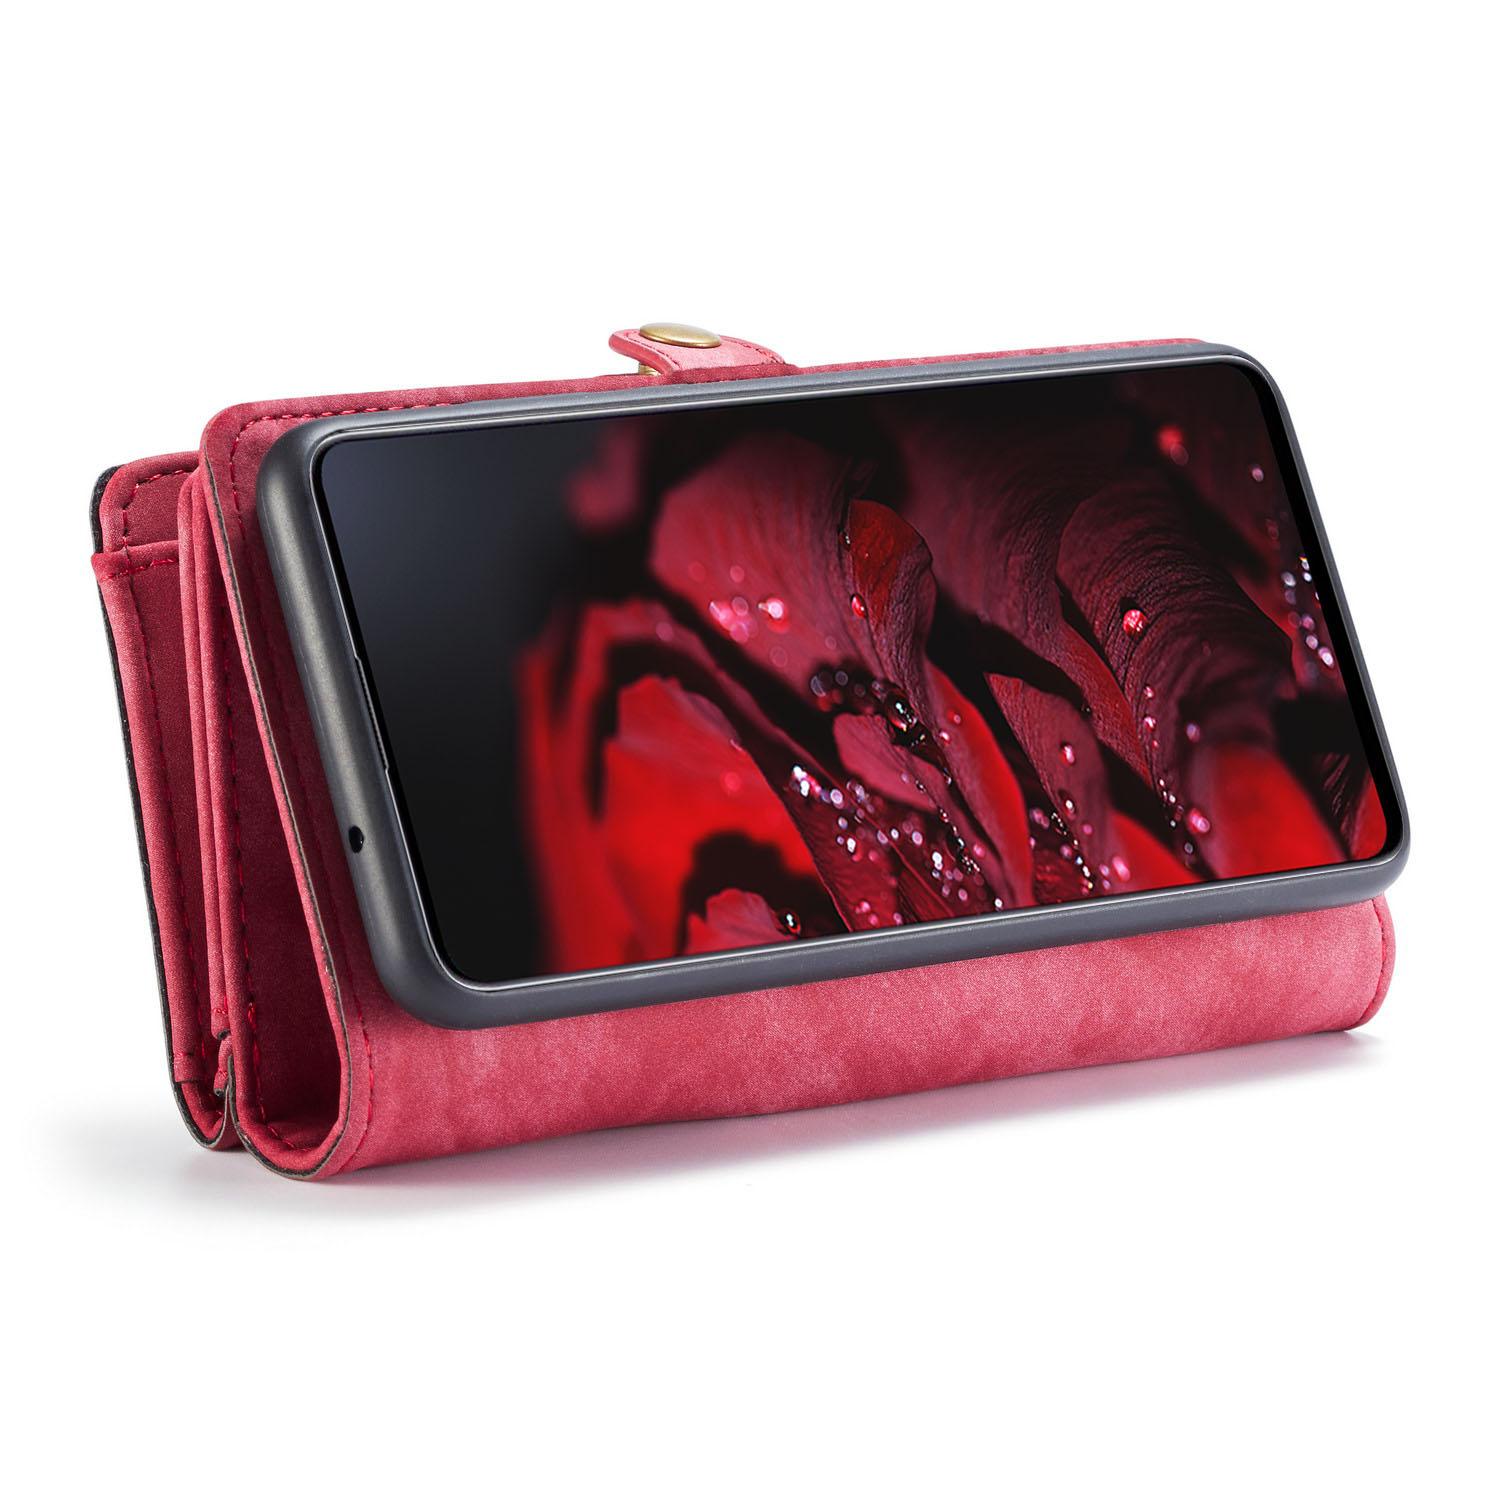 Samsung Galaxy A71 Multi-slot Wallet Case Red